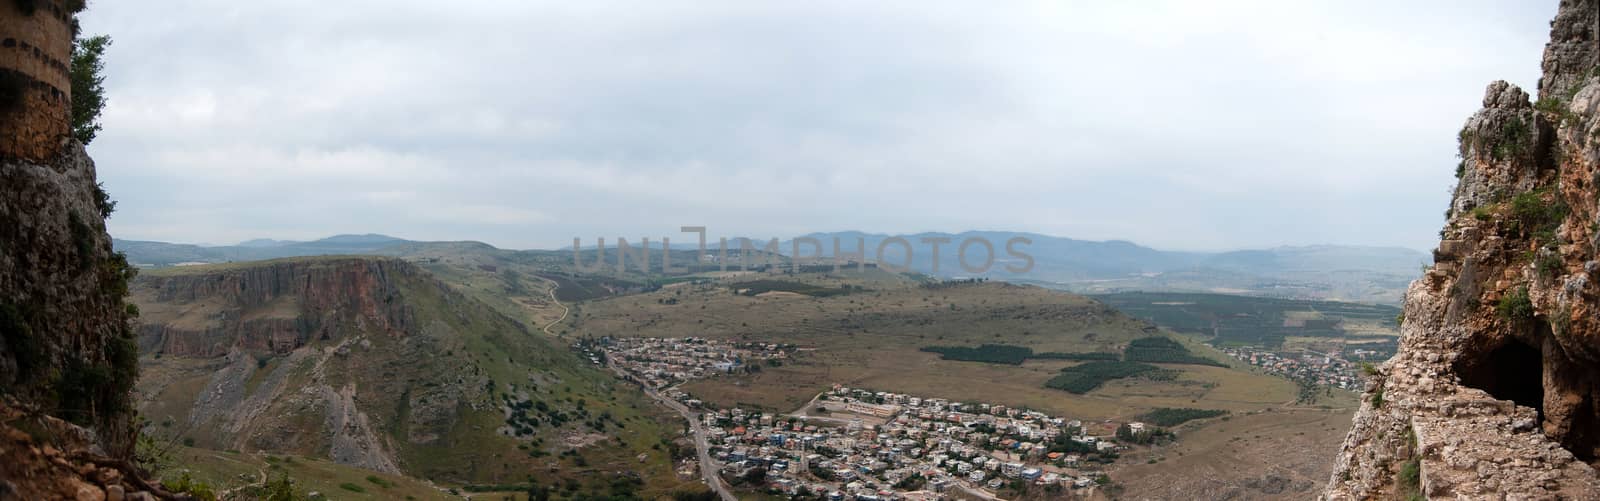 galilee panorama by javax